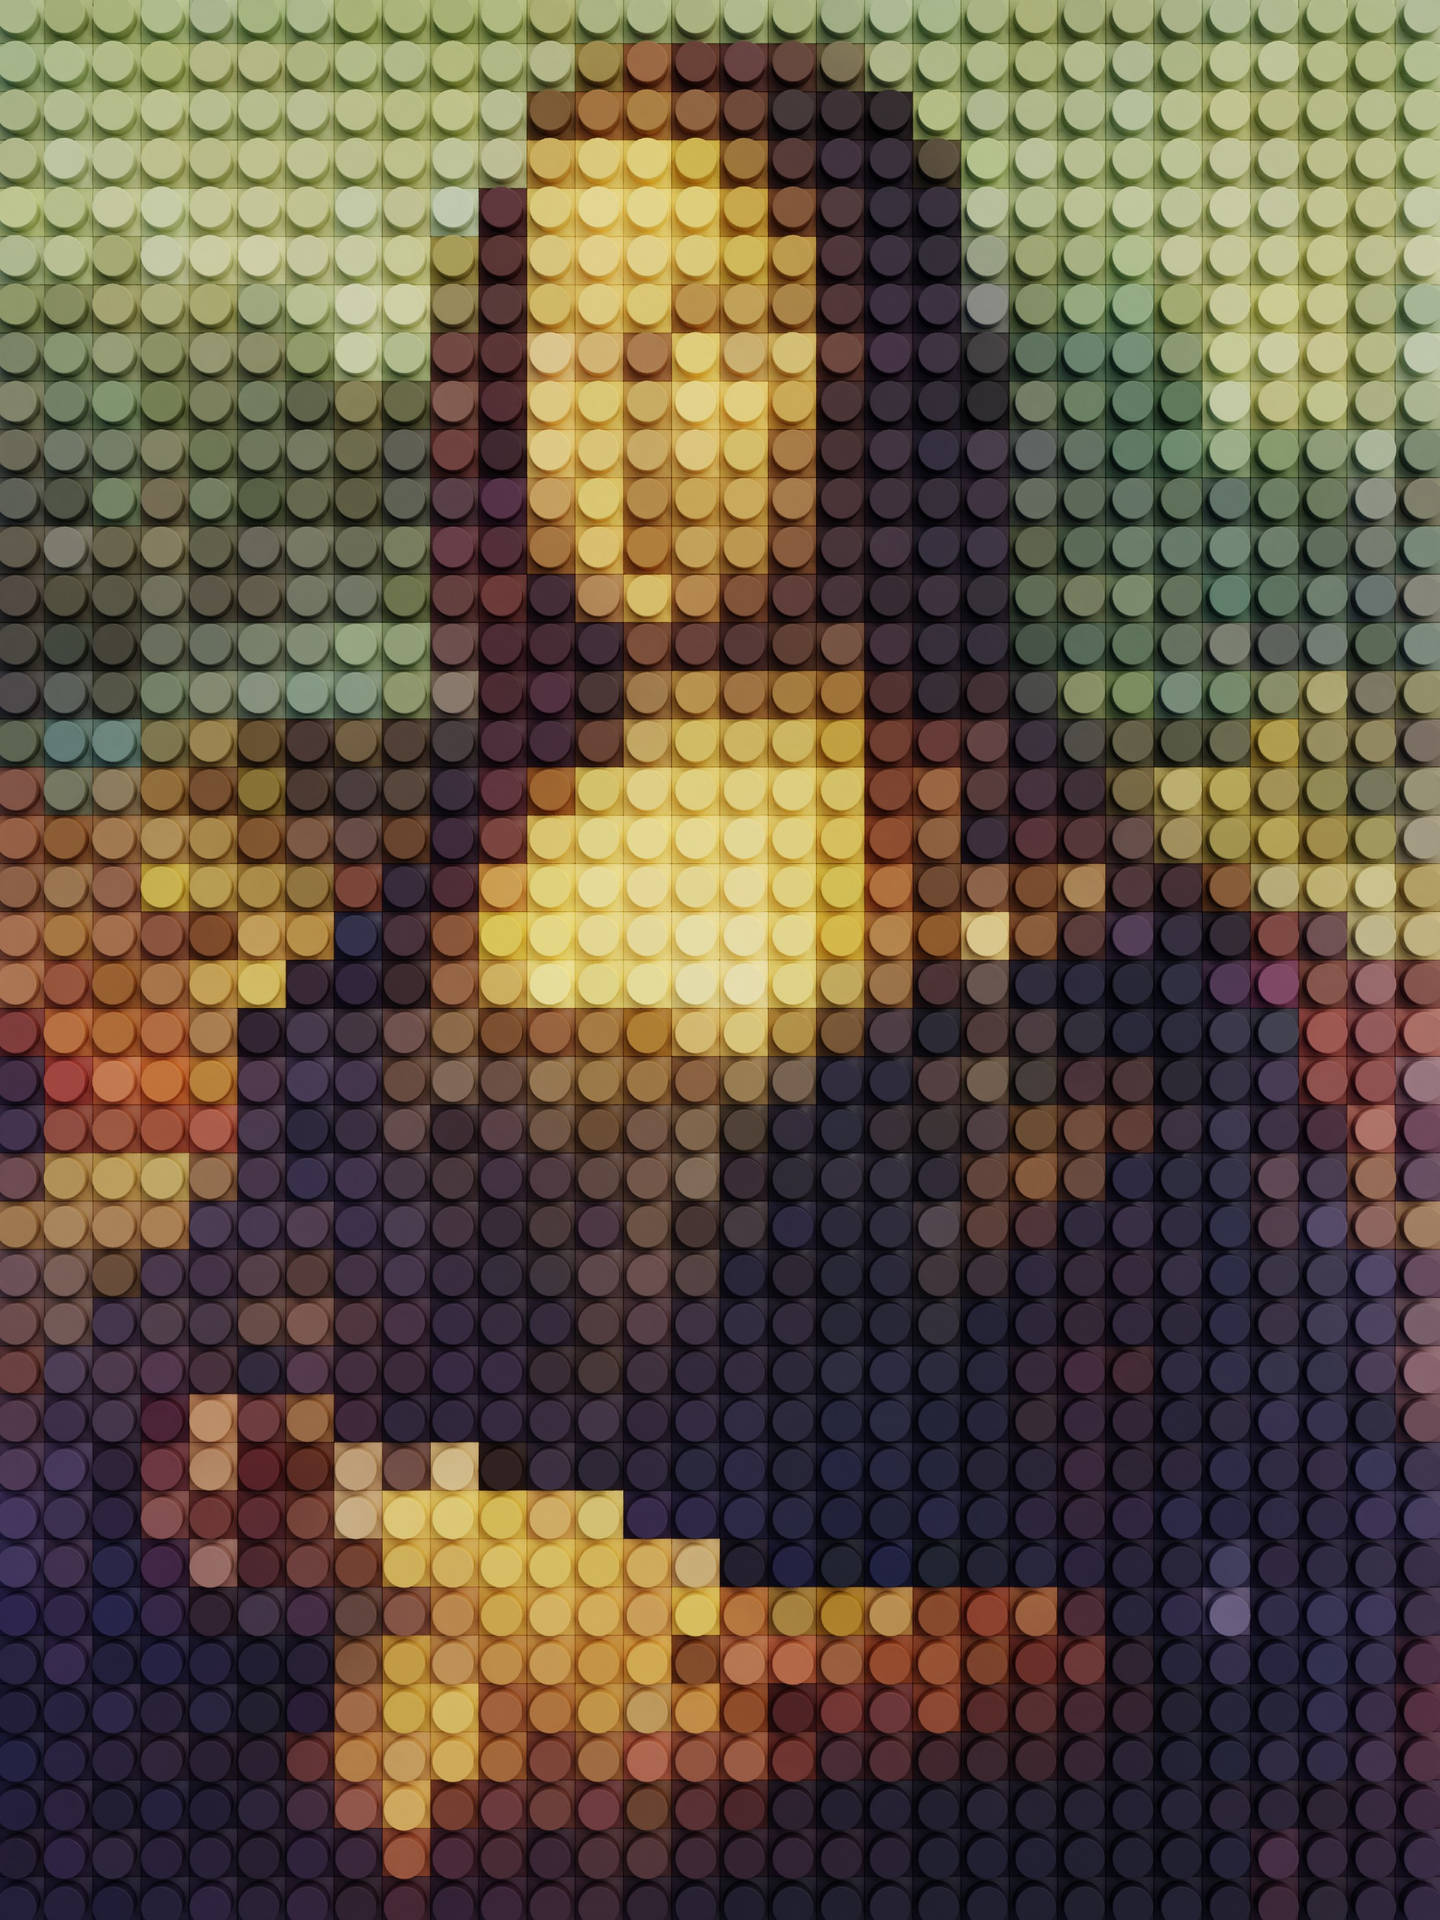 2100X2800 Pixel Art Wallpaper and Background